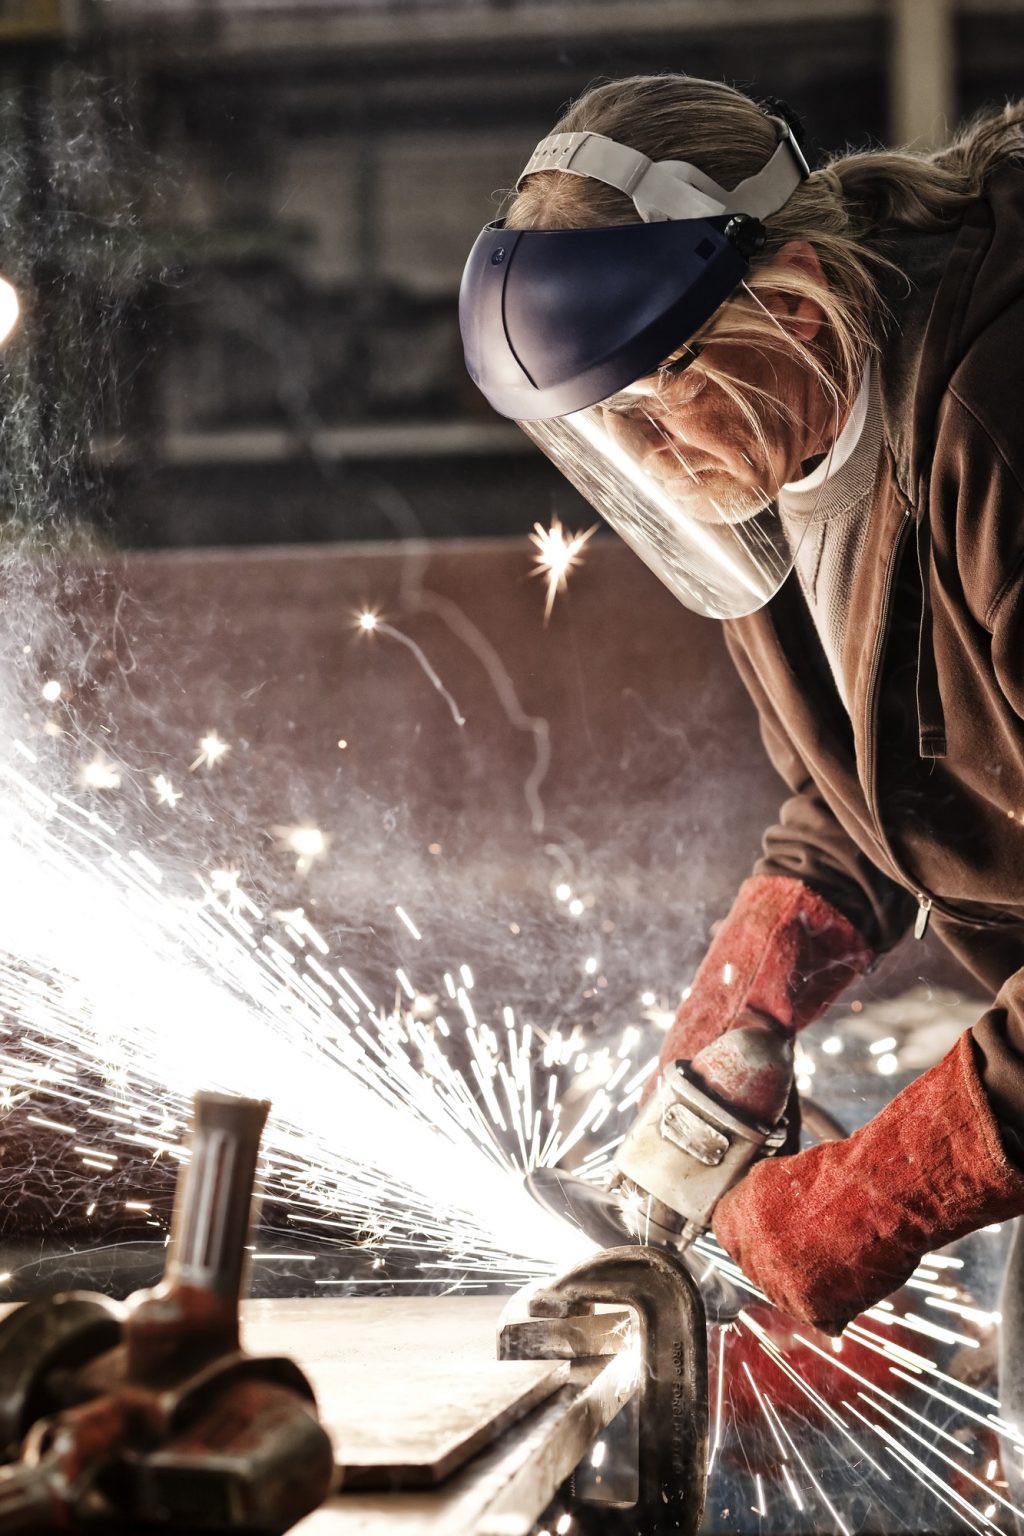 Factory worker grinding a steel edge in a sheet metal factory.